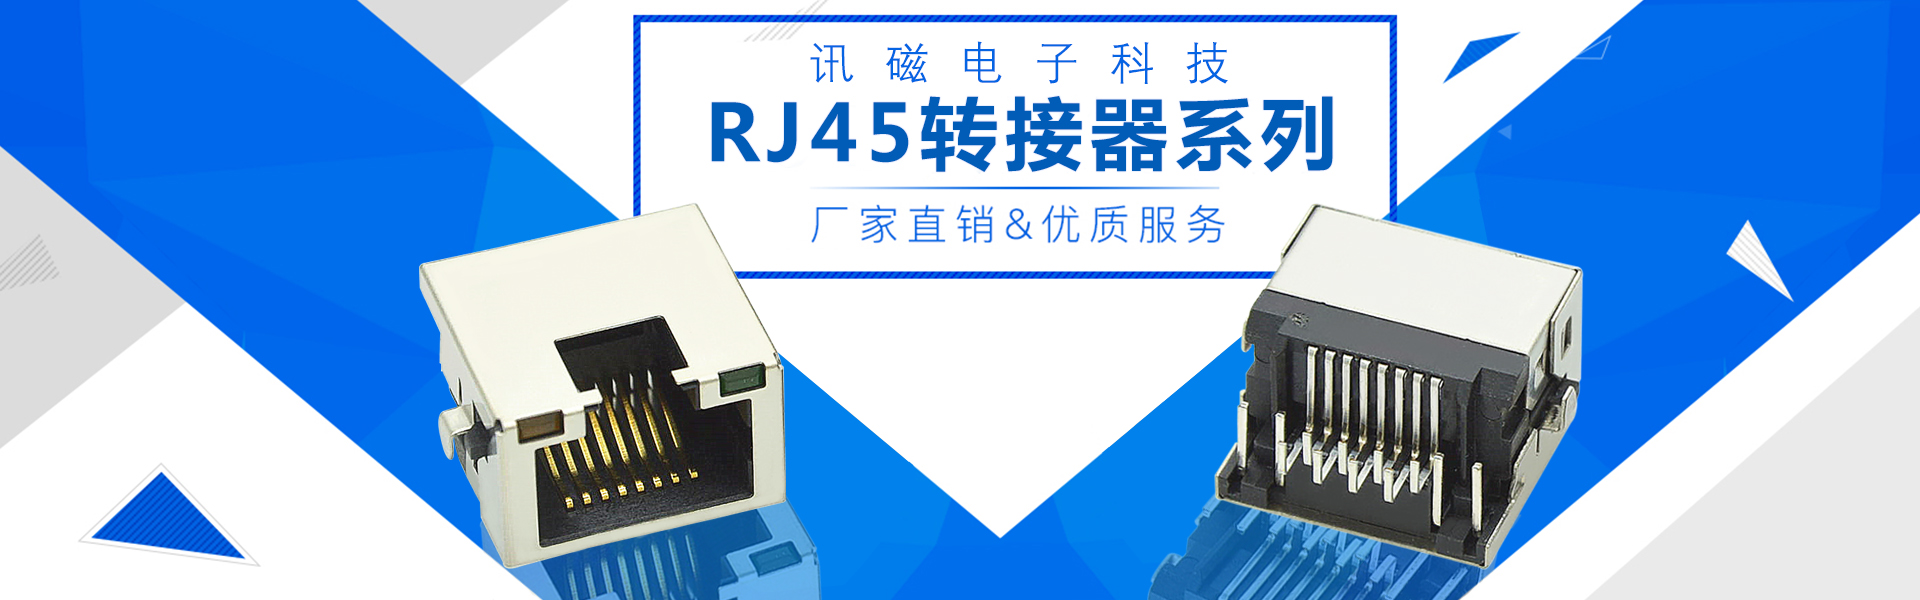 RJ45网络连接器